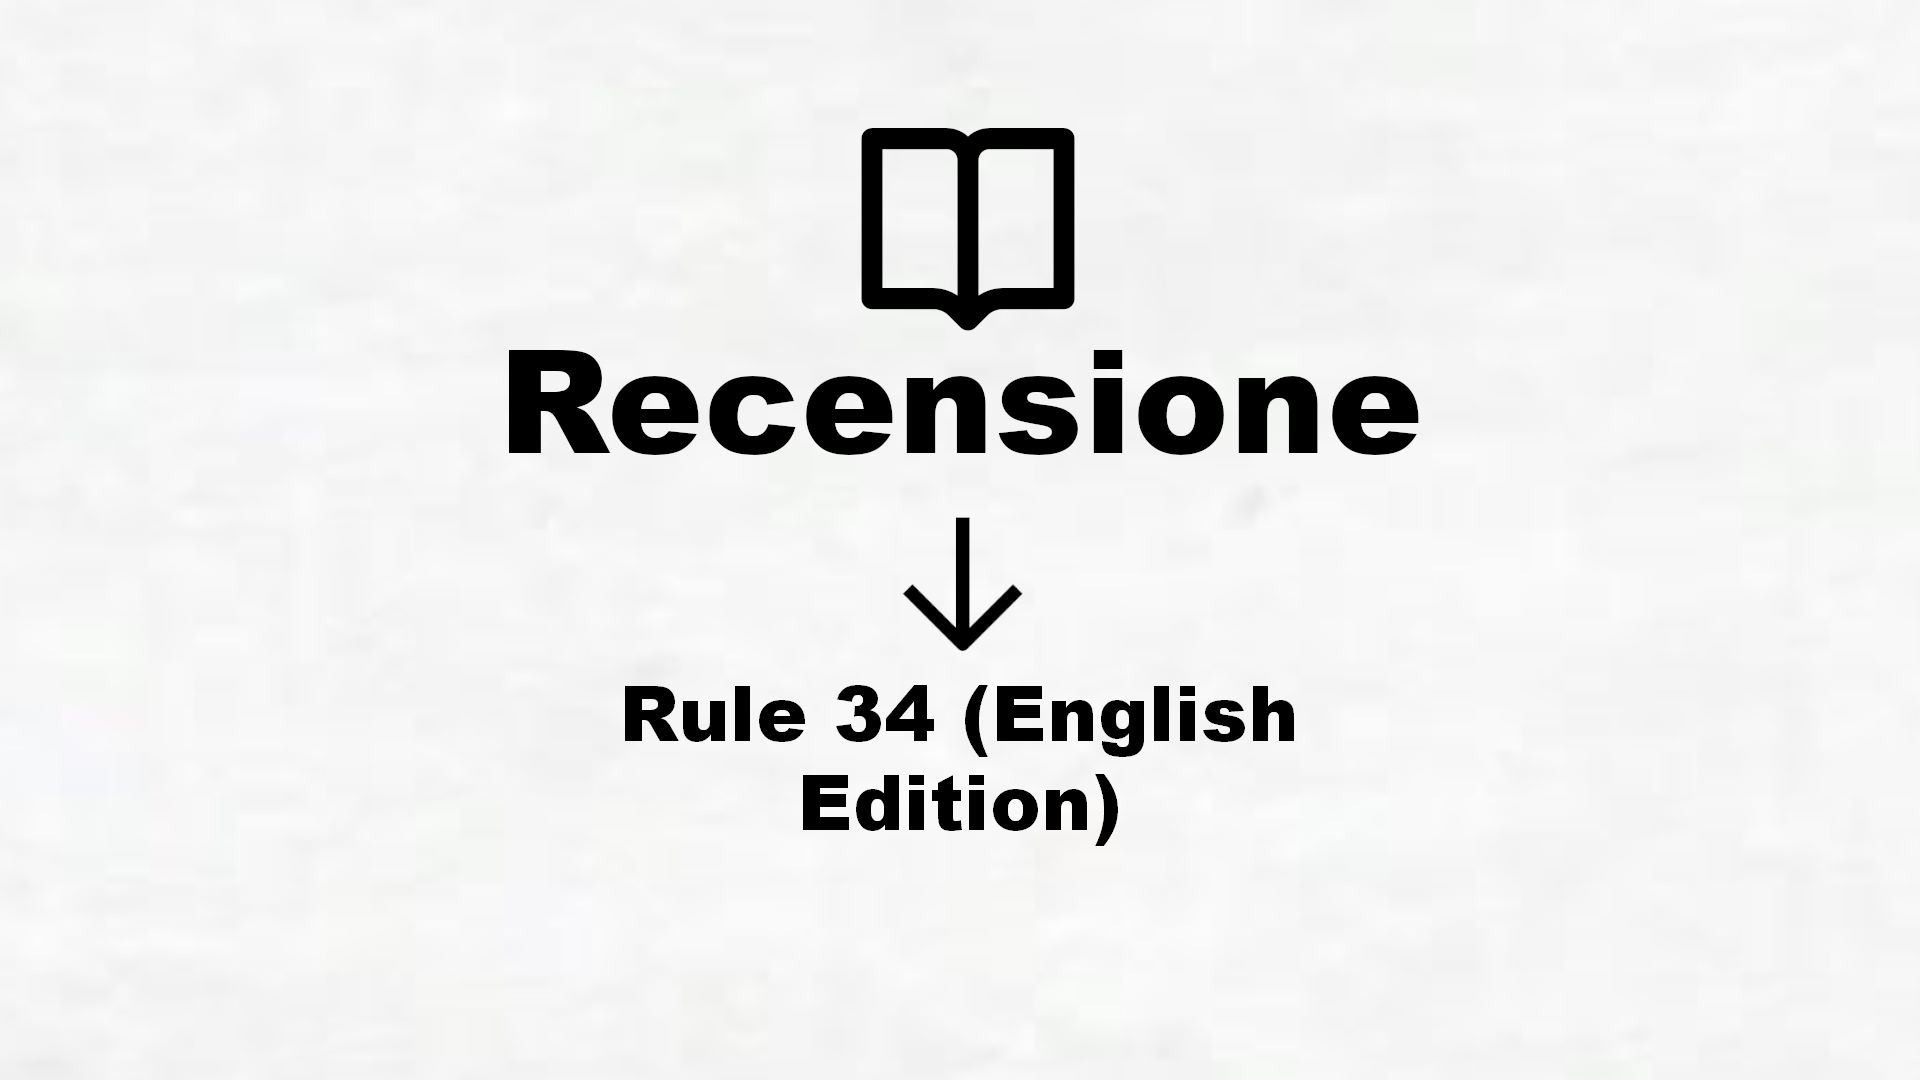 Rule 34 (English Edition) – Recensione Libro